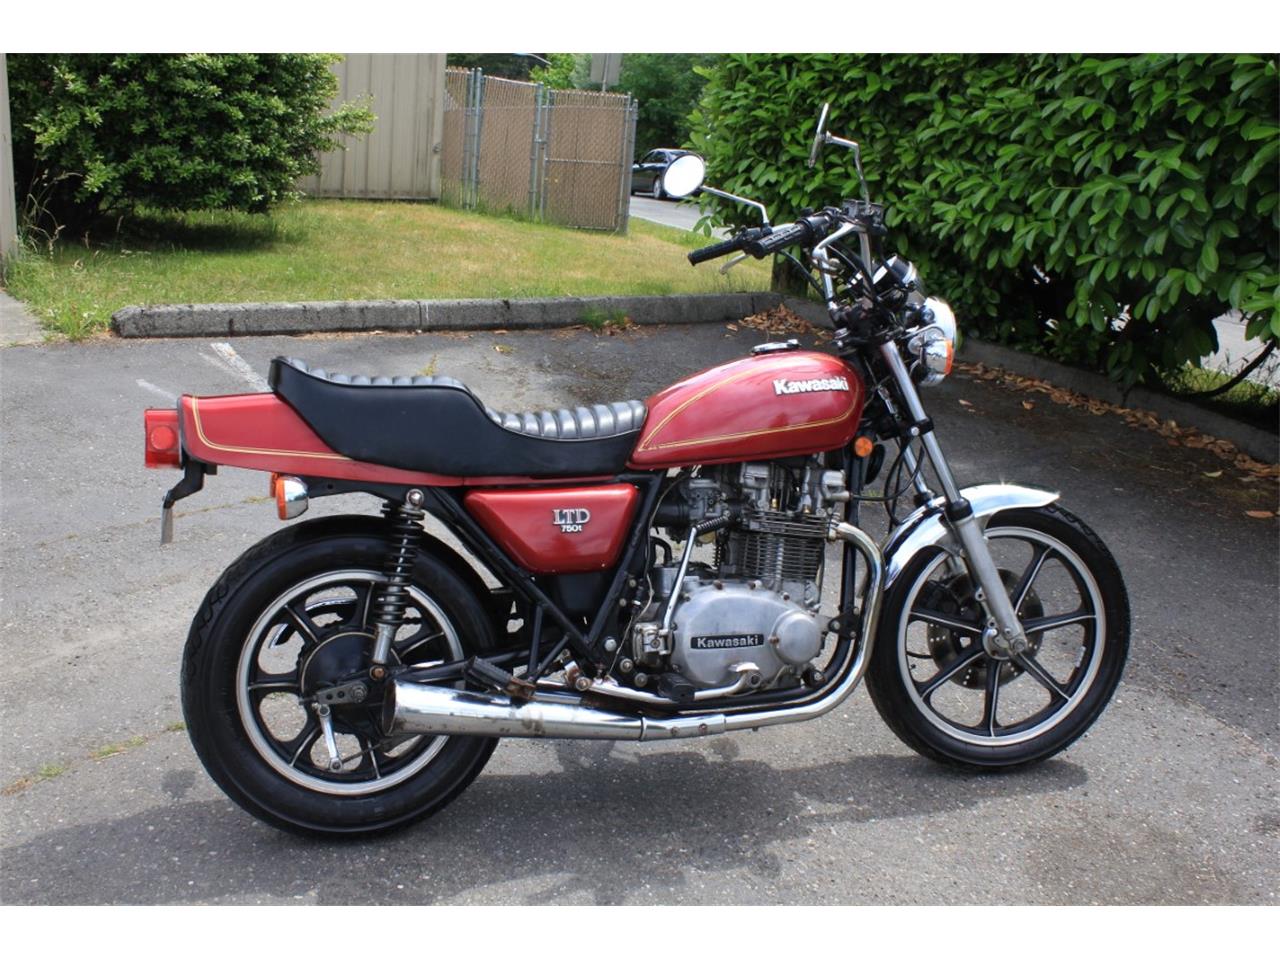 1980 Kawasaki Motorcycle for Sale | ClassicCars.com | CC-1239619